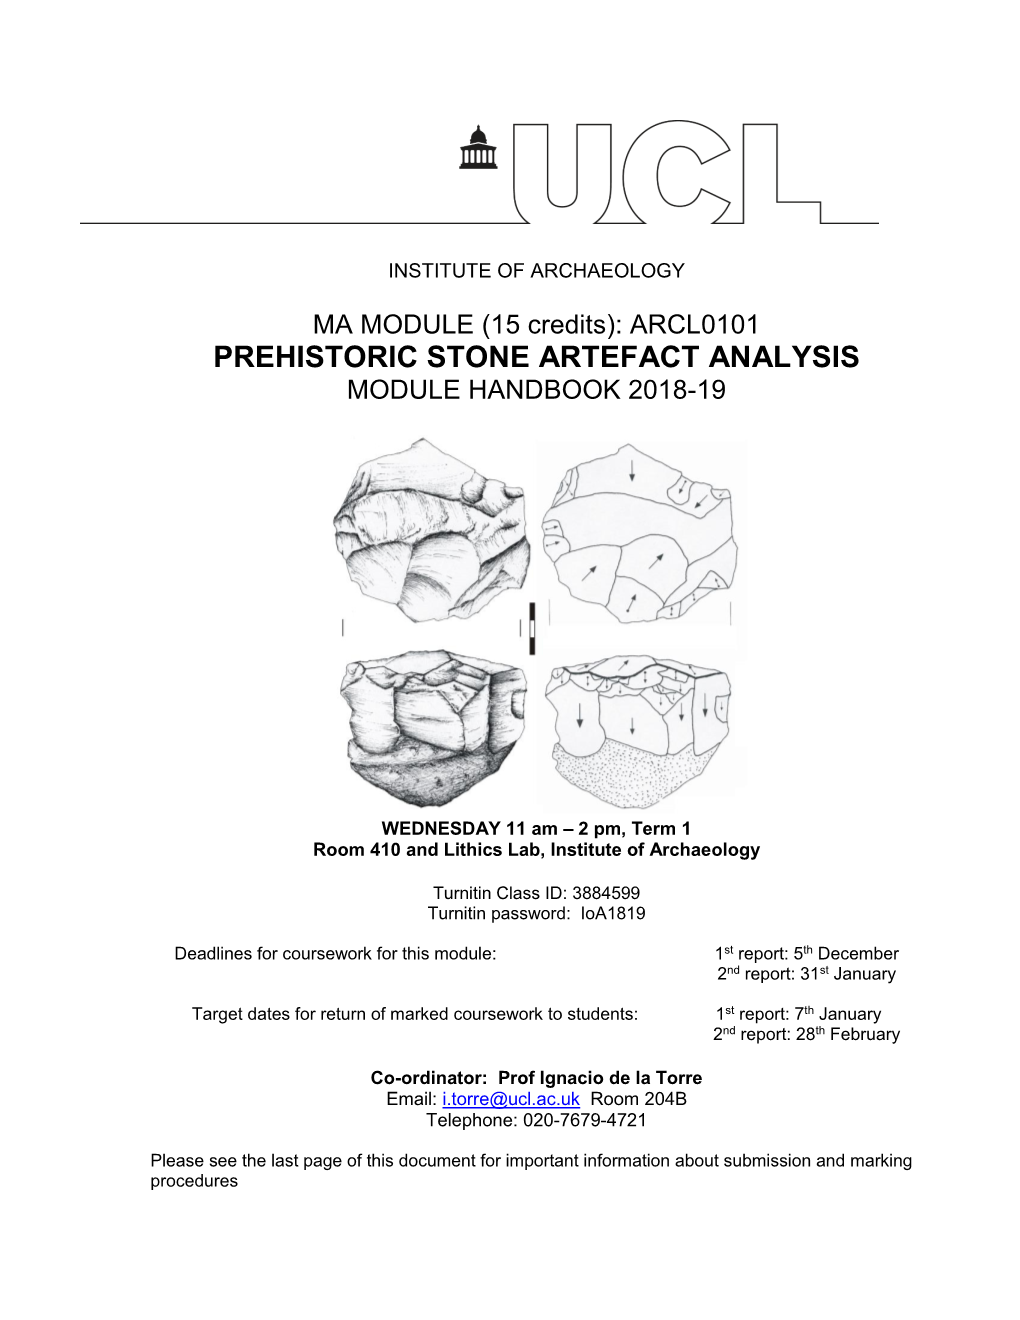 Prehistoric Stone Artefact Analysis Module Handbook 2018-19